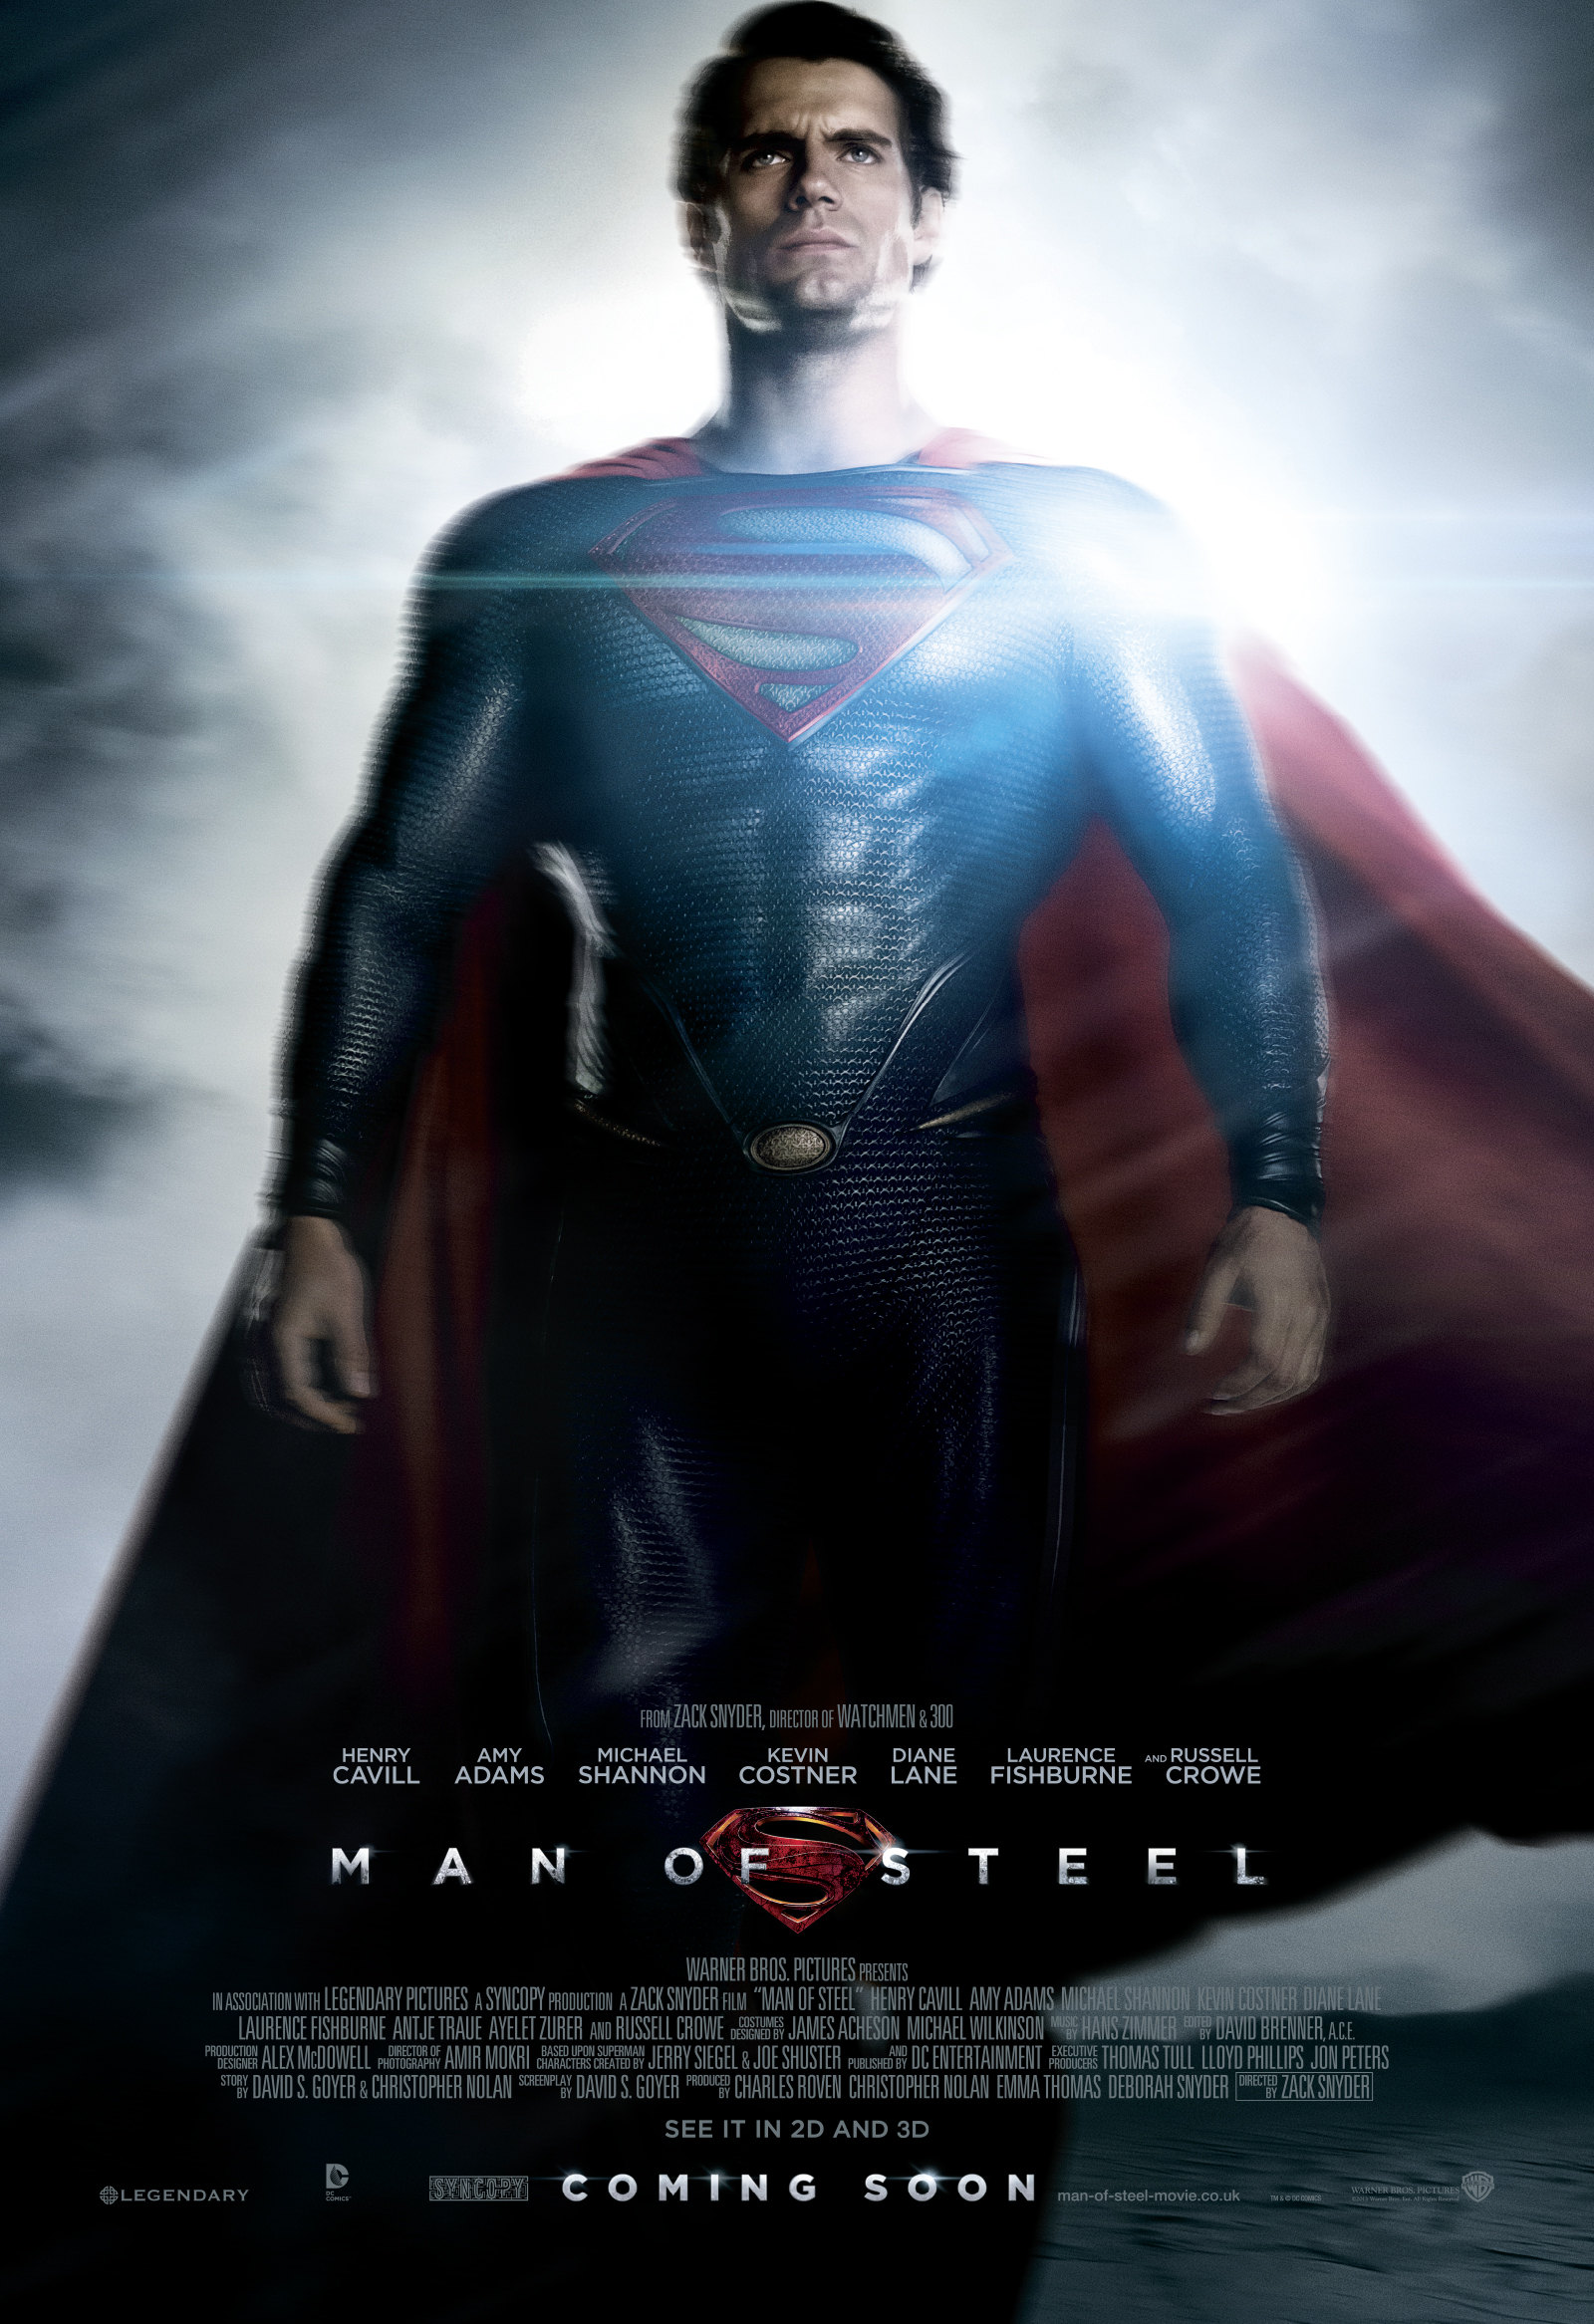 New Image of Henry Cavill on set of Superman: Man of Steel - HeyUGuys